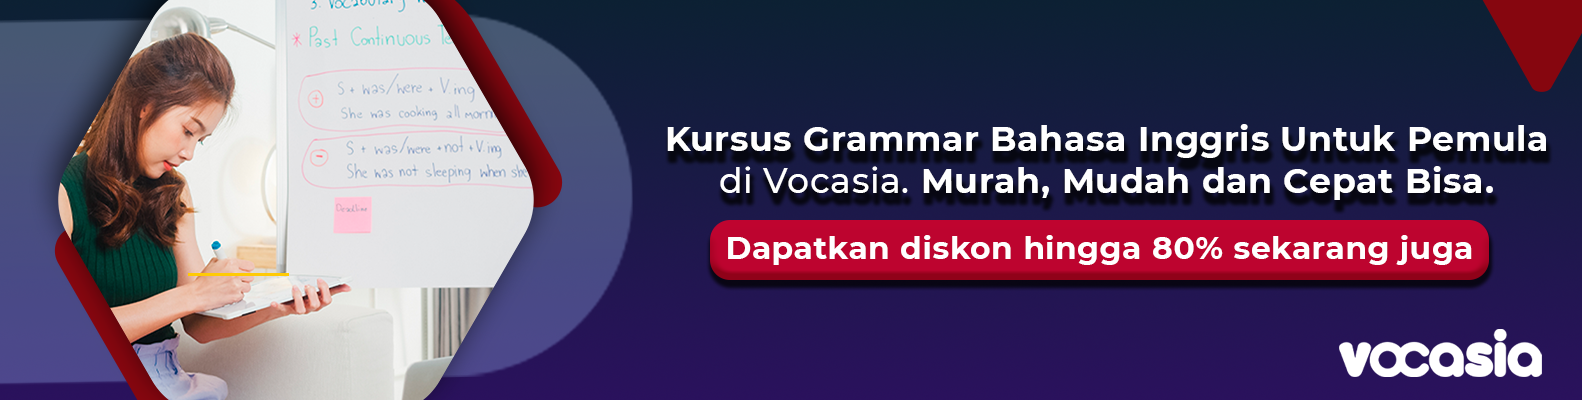 Kursus online belajar grammar vocasia